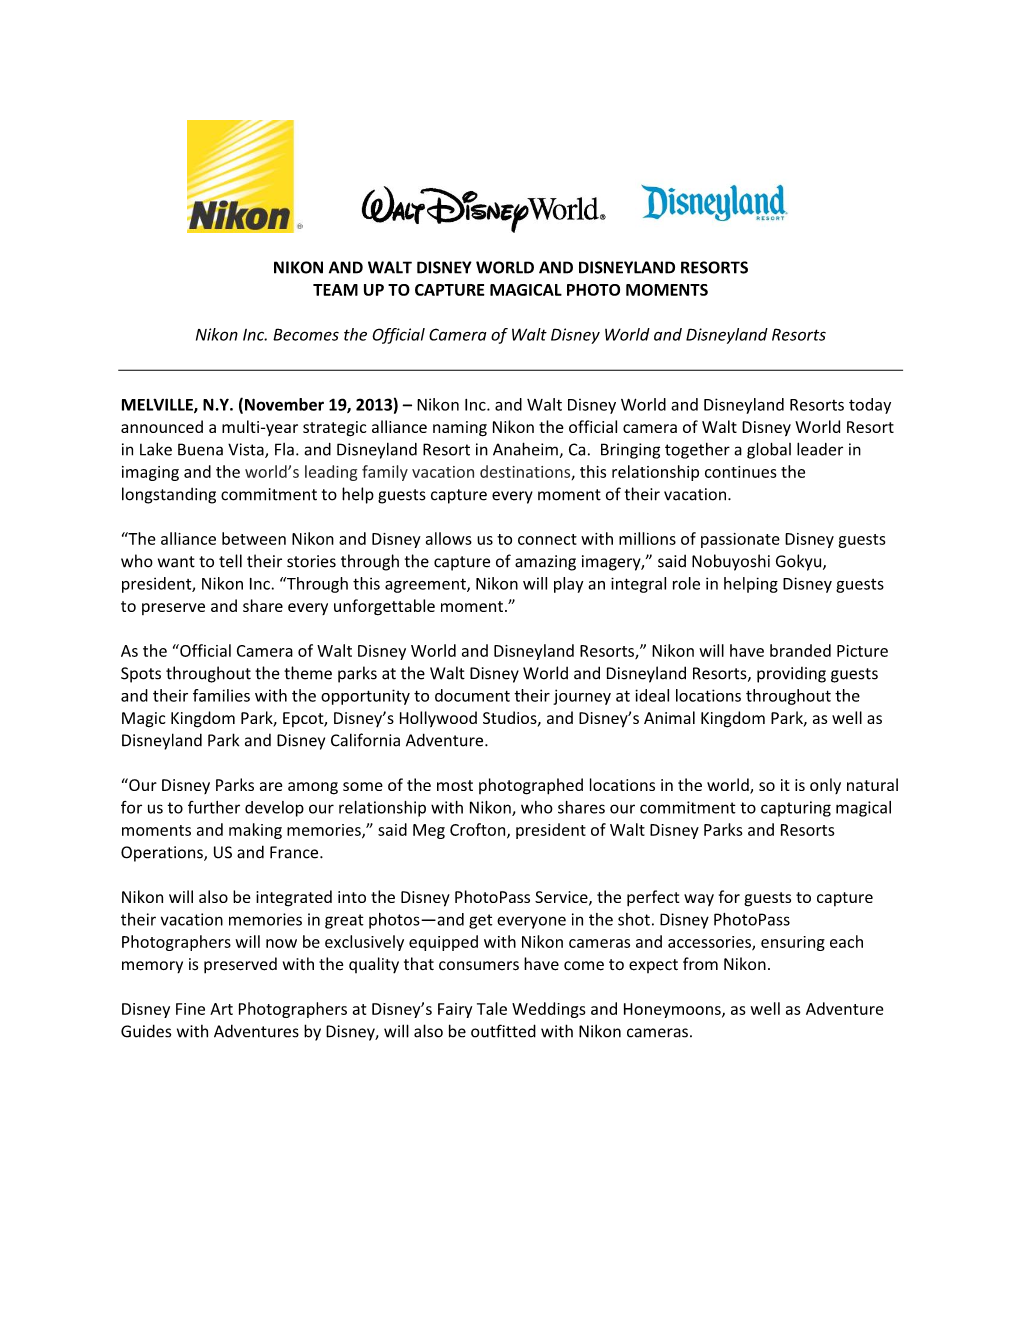 Nikon and Walt Disney World and Disneyland Resorts Team up to Capture Magical Photo Moments